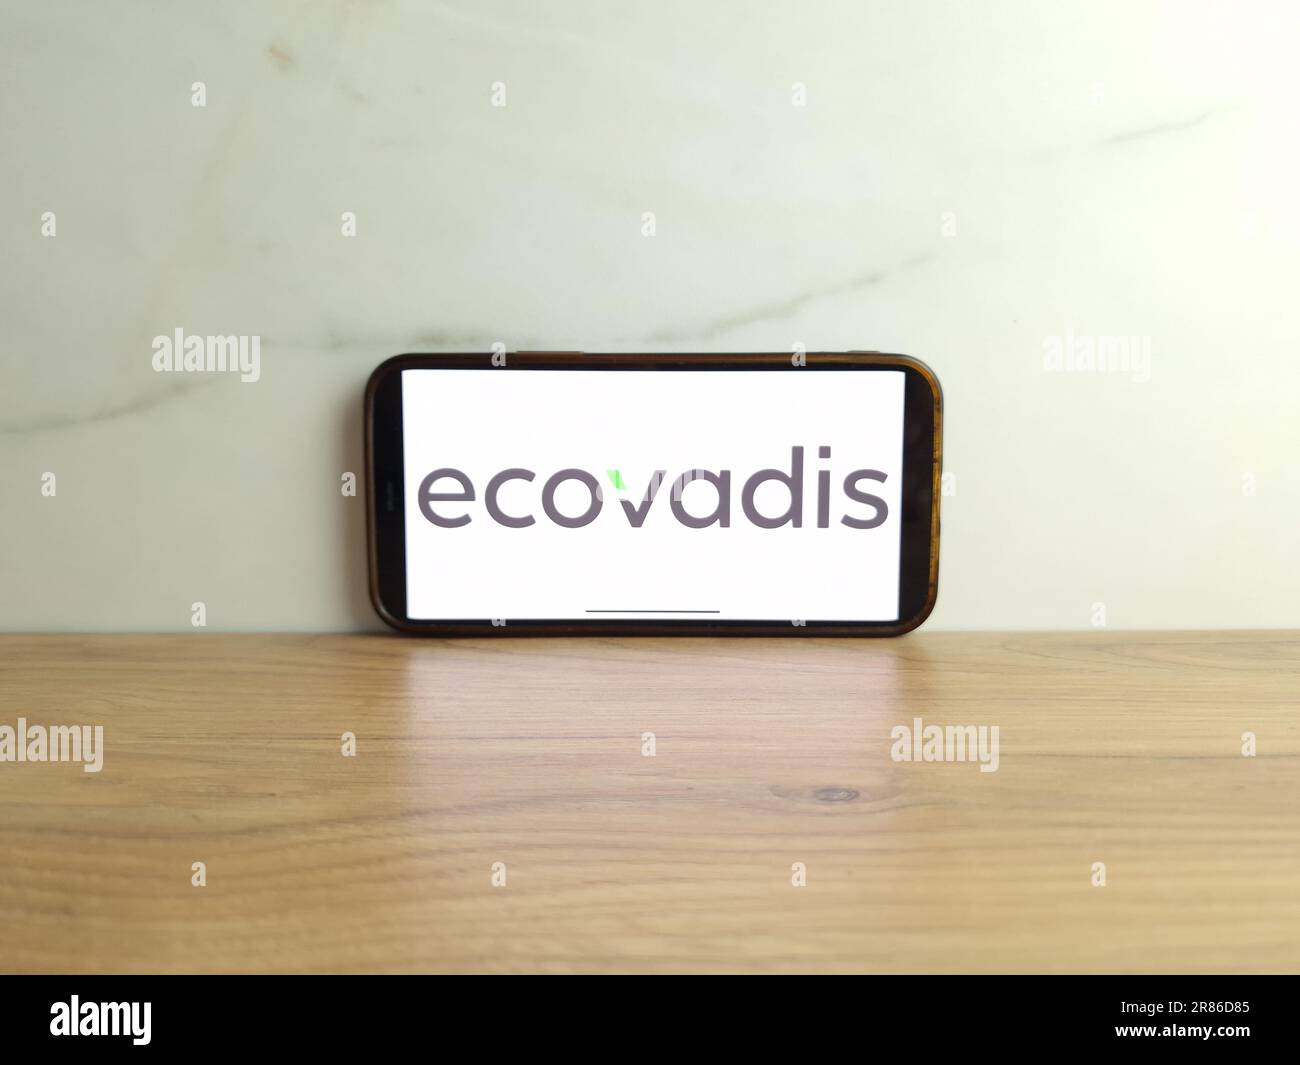 Konskie, Polen - 17. Juni 2023: EcoVadis-Firmenlogo auf dem Bildschirm des Mobiltelefons Stockfoto